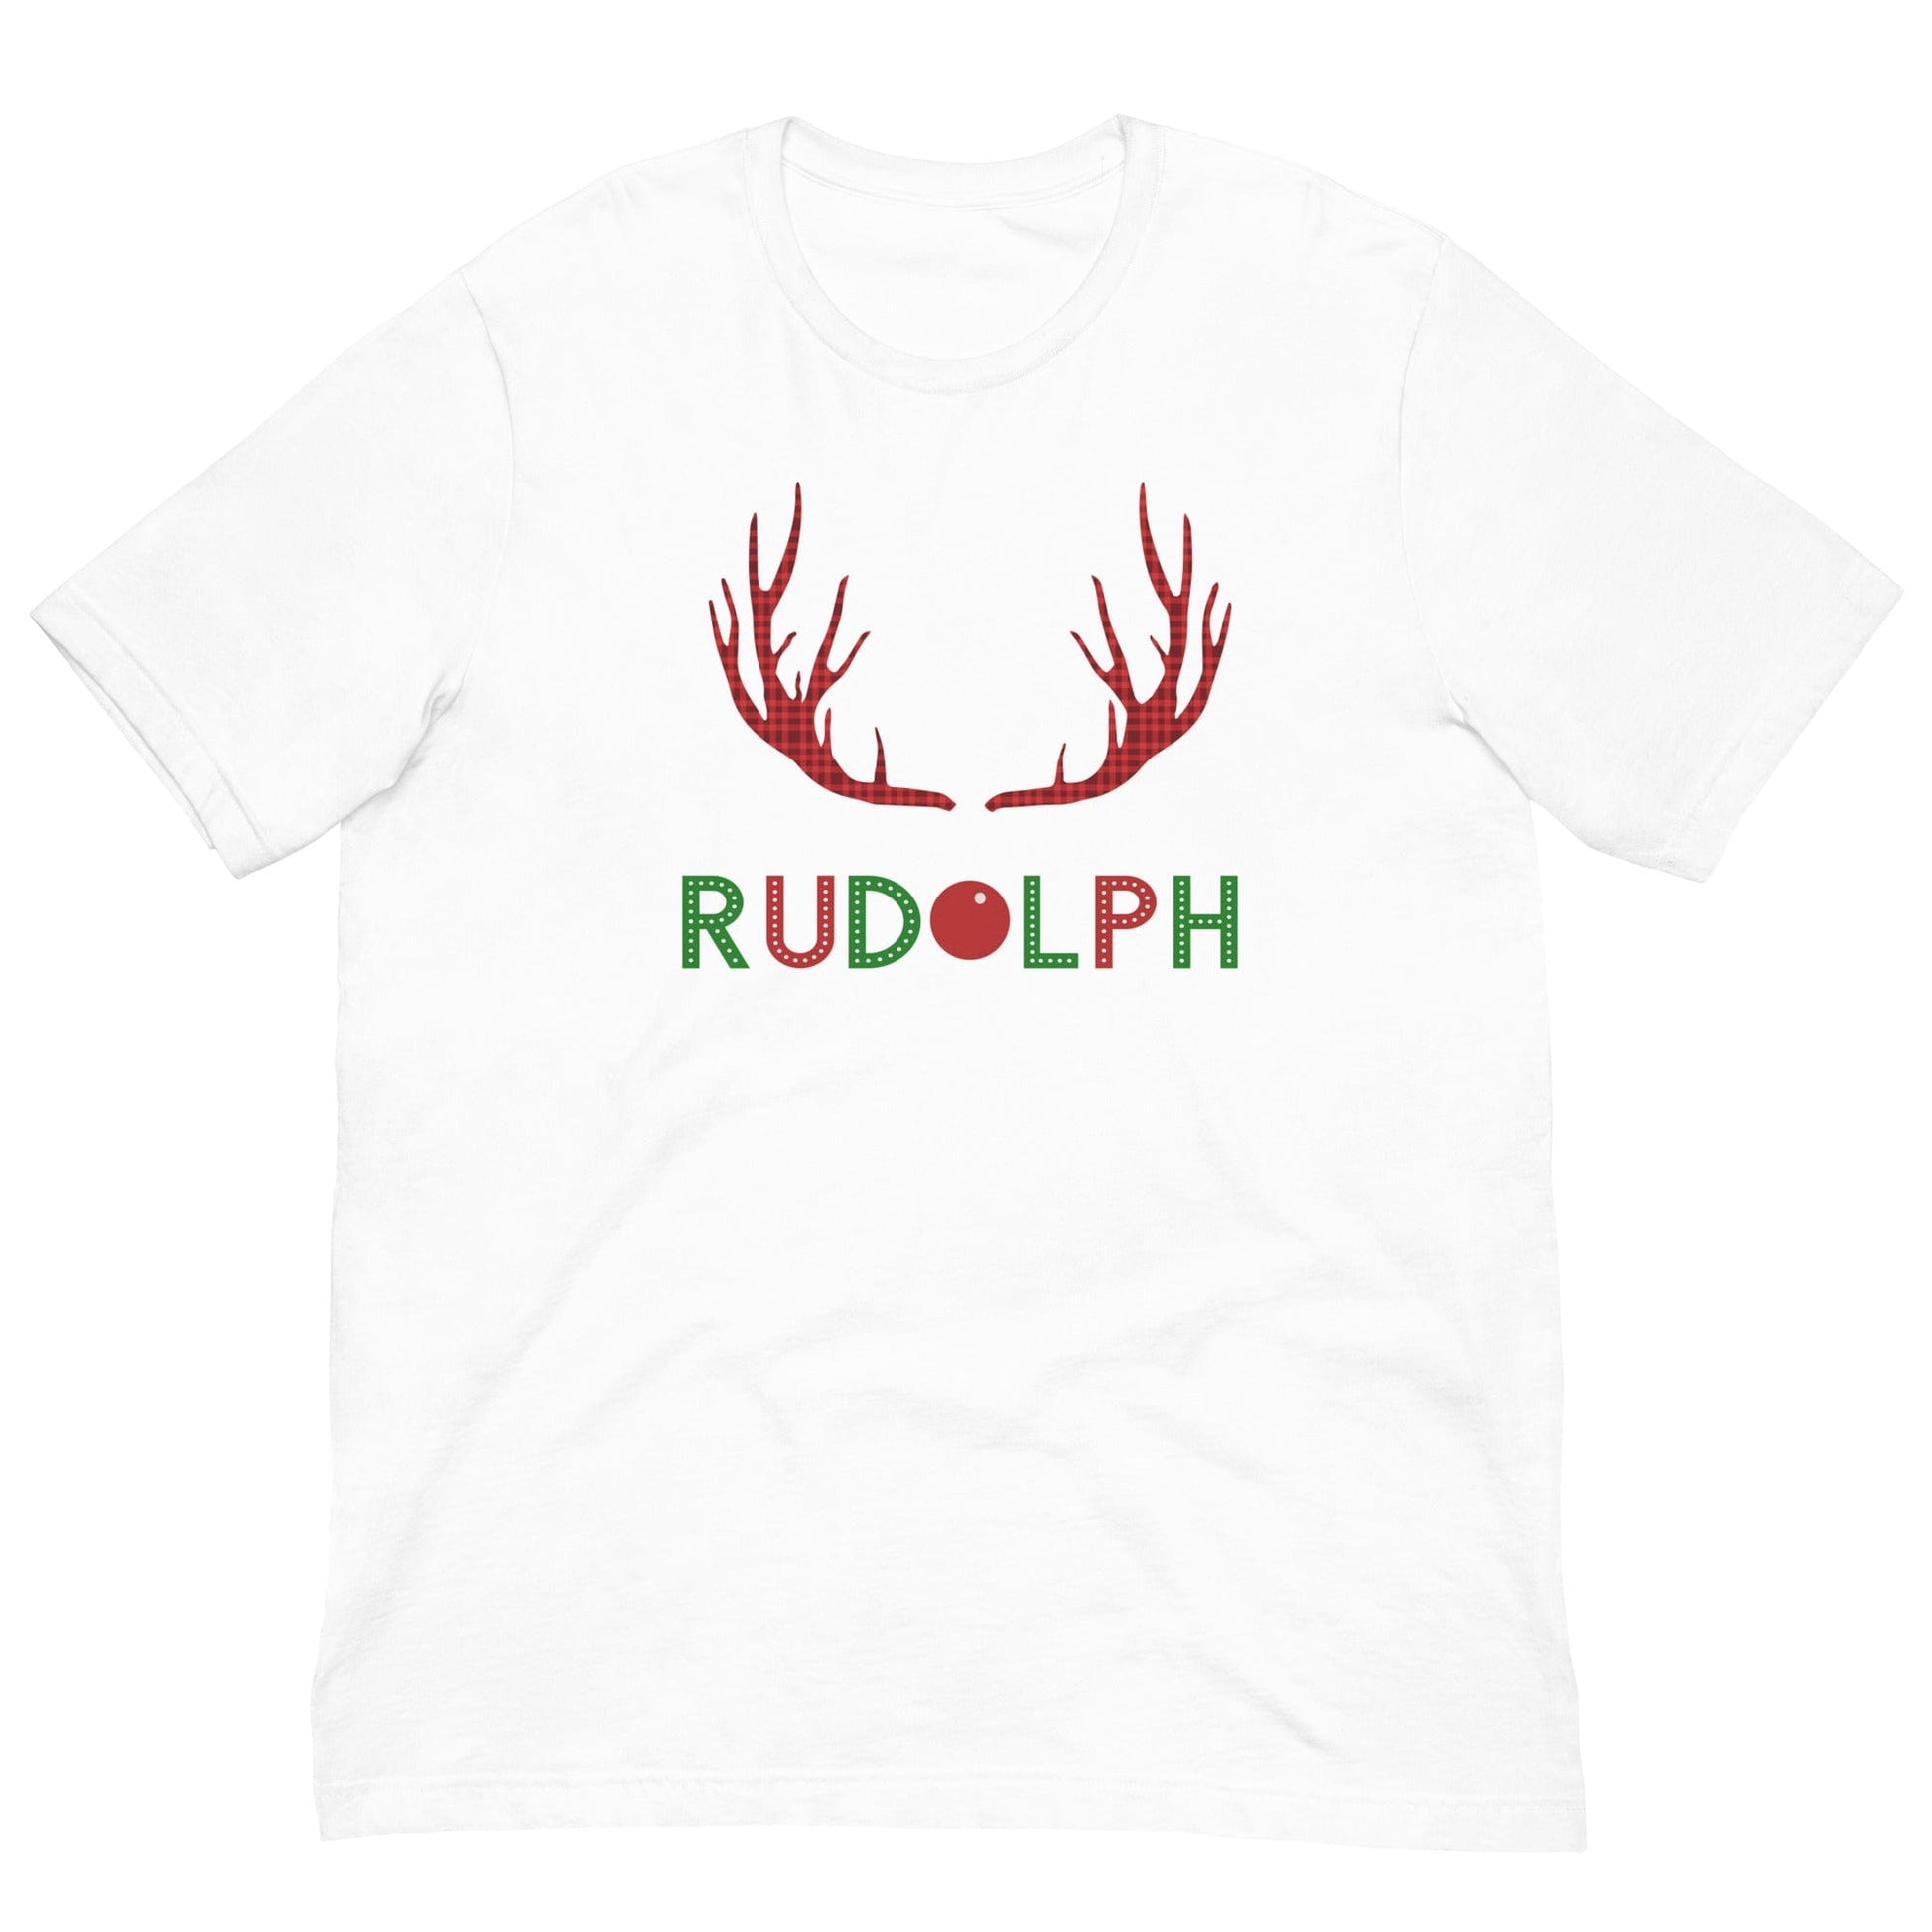 Rudolf the Reindeer T-shirt White / XS